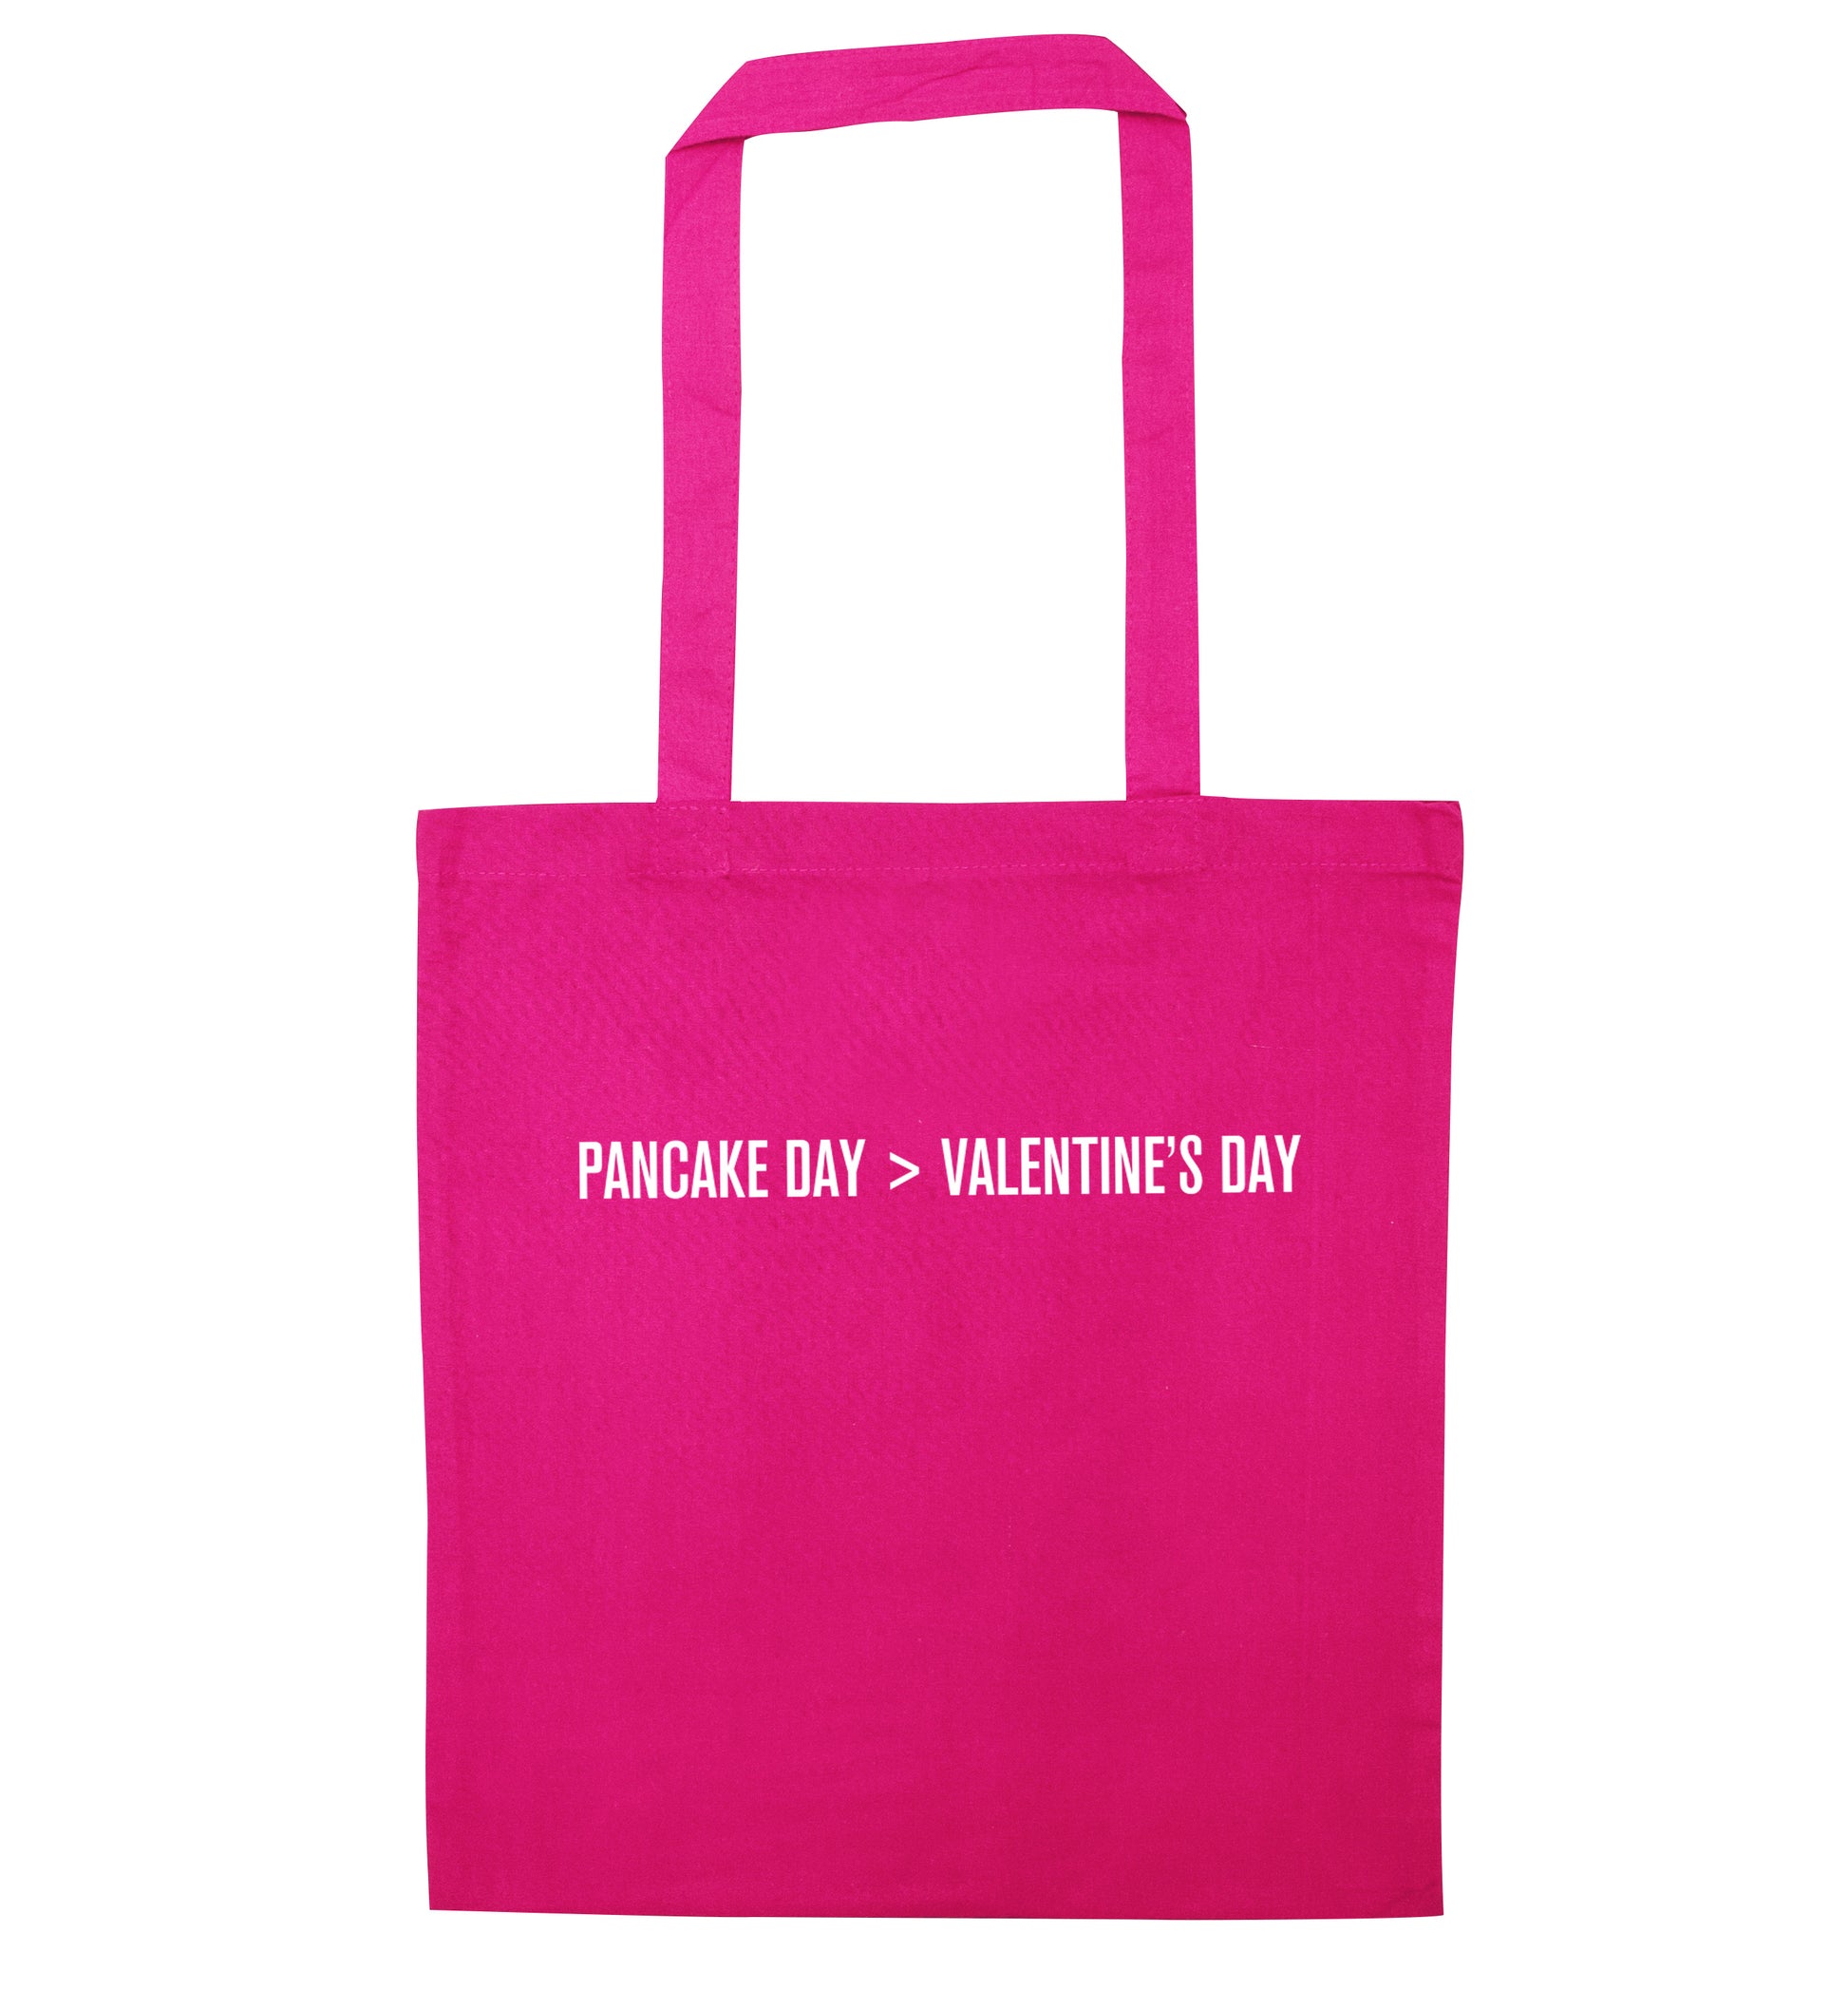 Valentine's day > pancake day pink tote bag